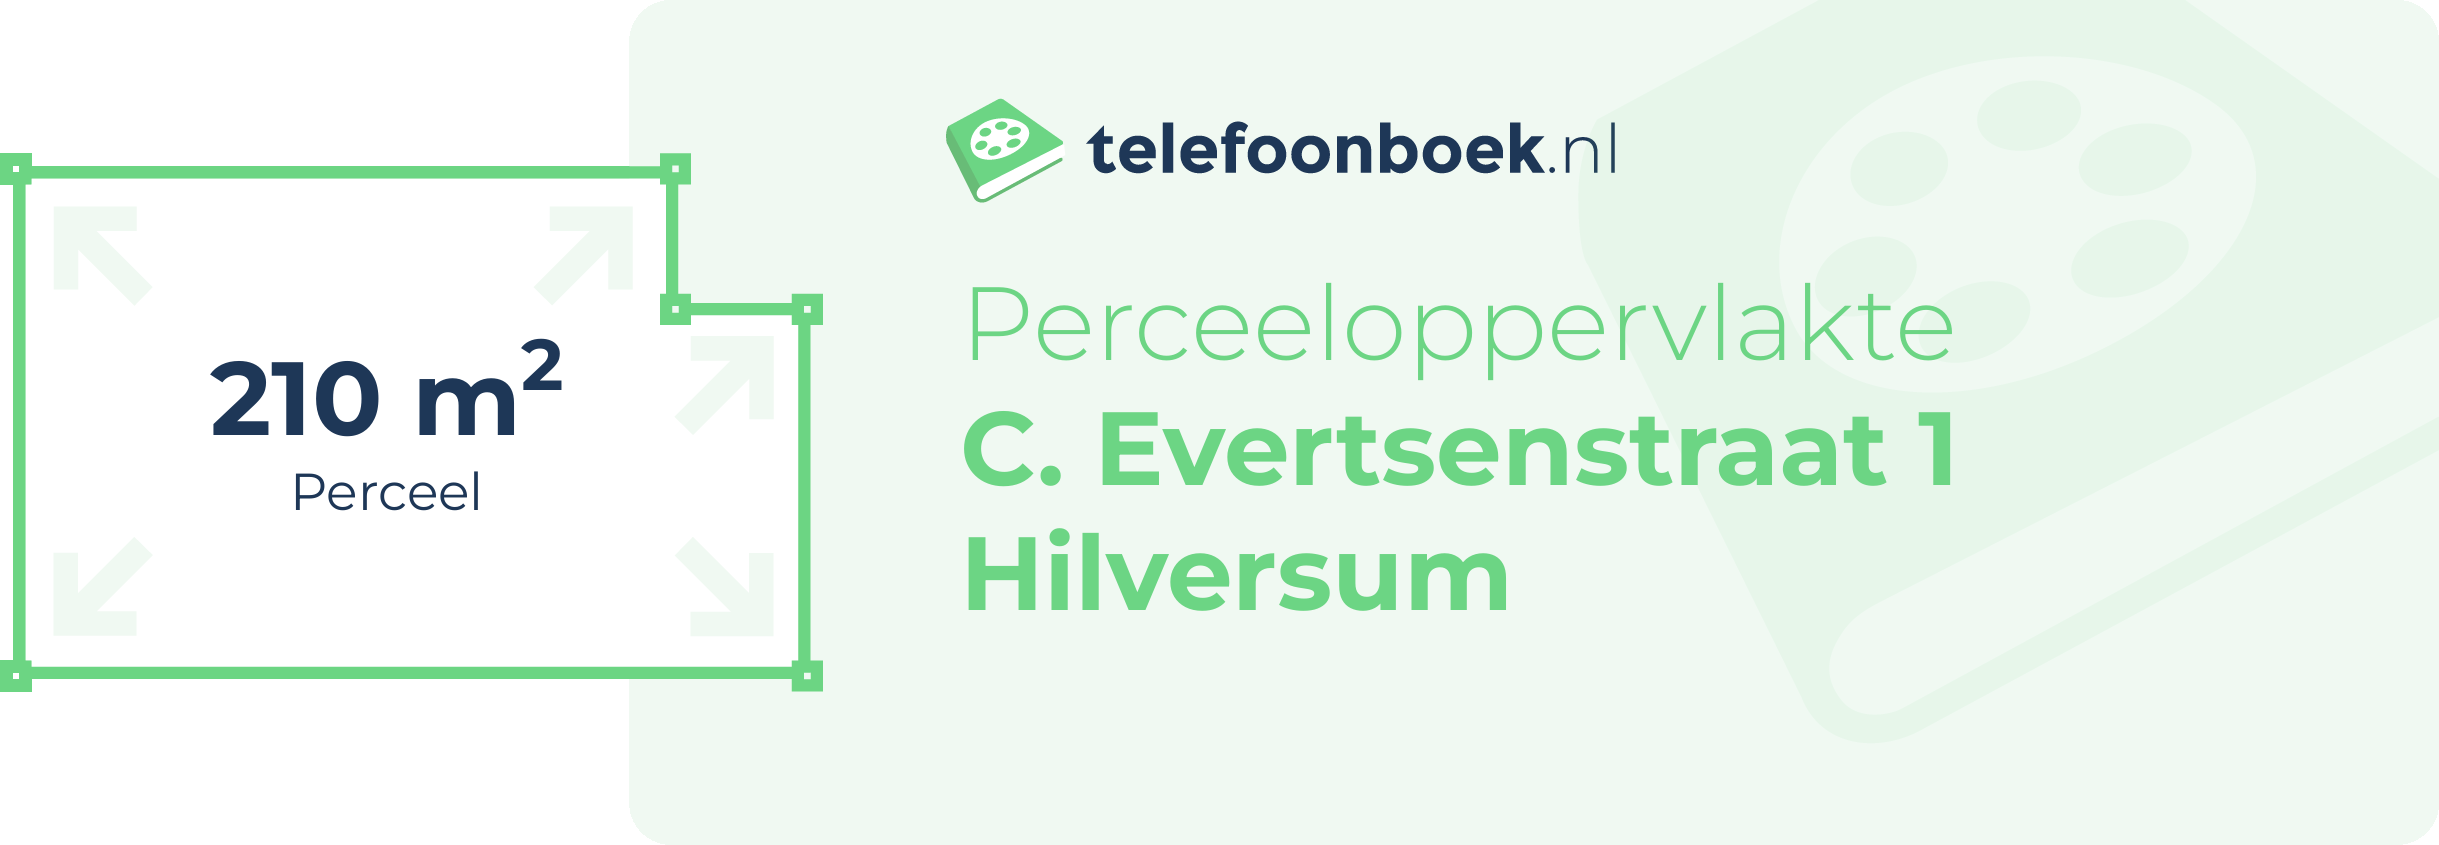 Perceeloppervlakte C. Evertsenstraat 1 Hilversum